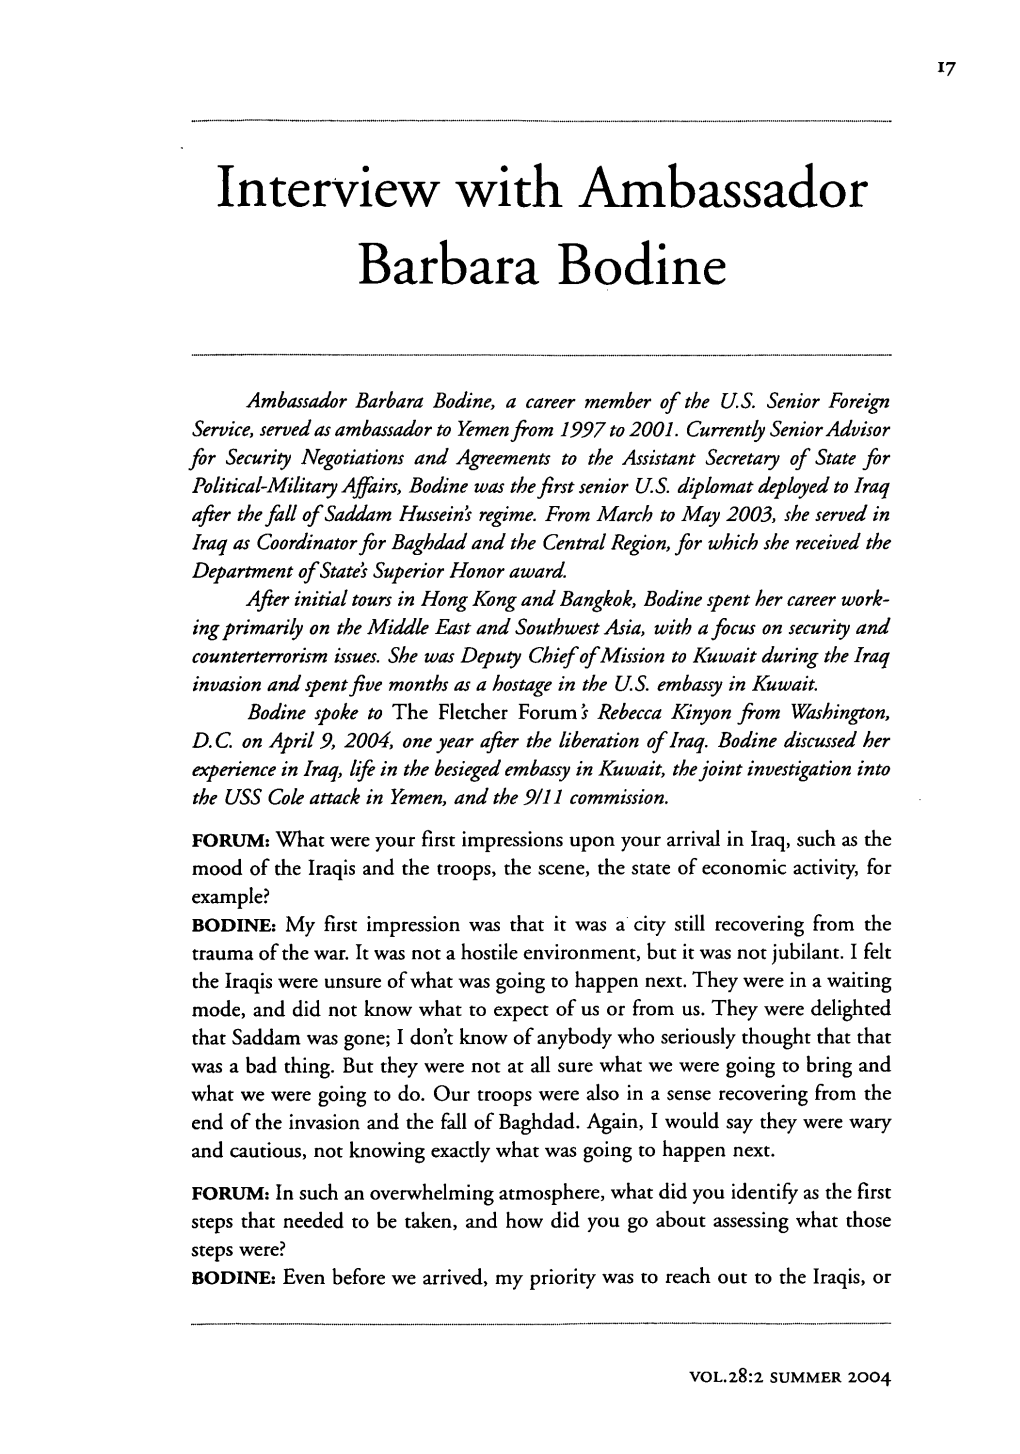 Interview with Ambassador Barbara Bodine